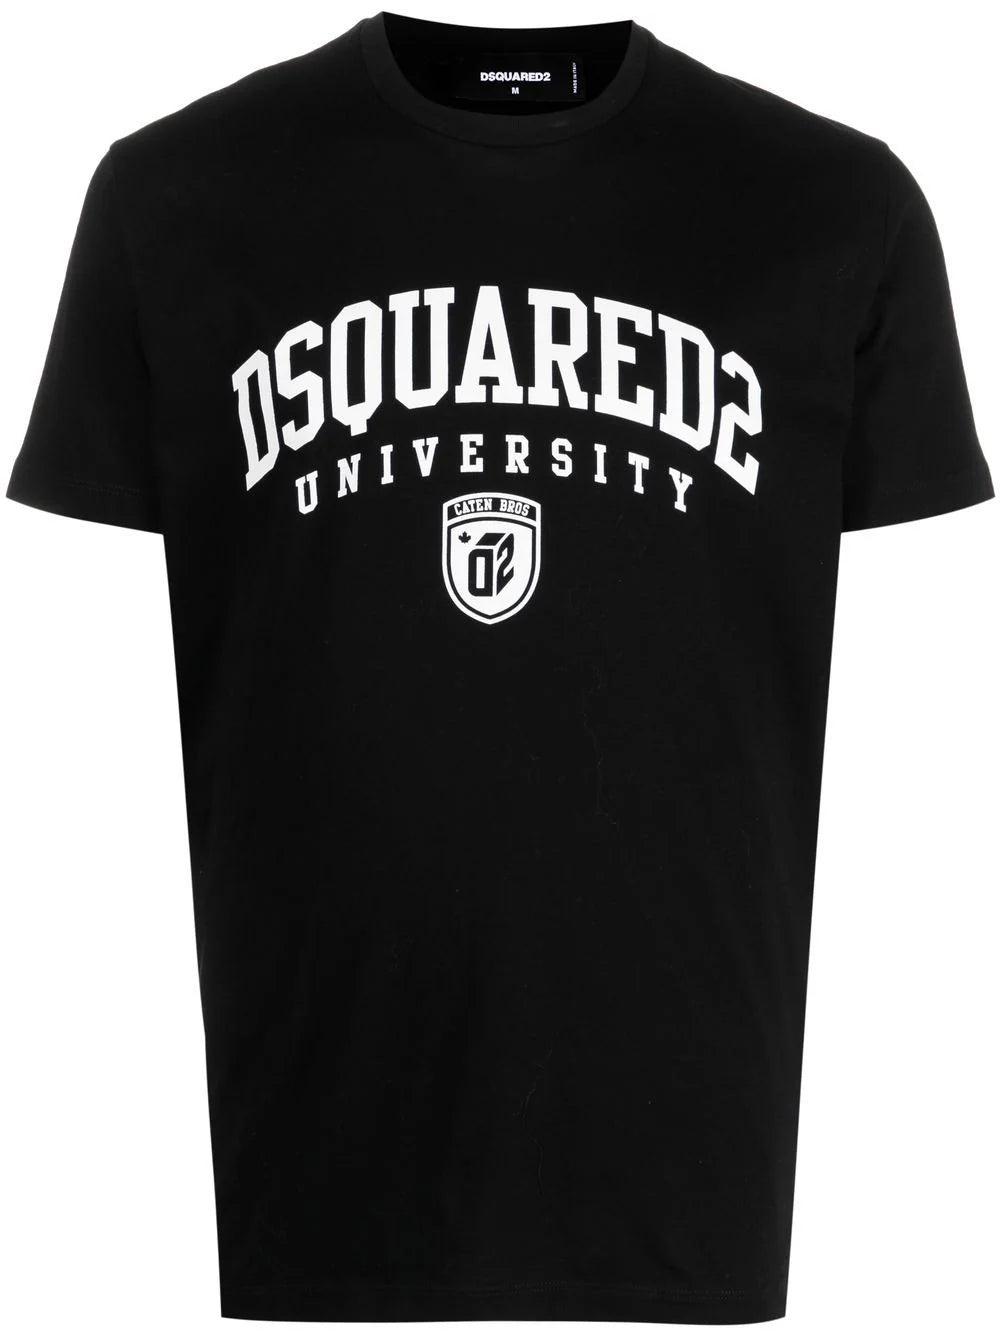 DSQUARED2 University Print Cool T-Shirt Black - MAISONDEFASHION.COM